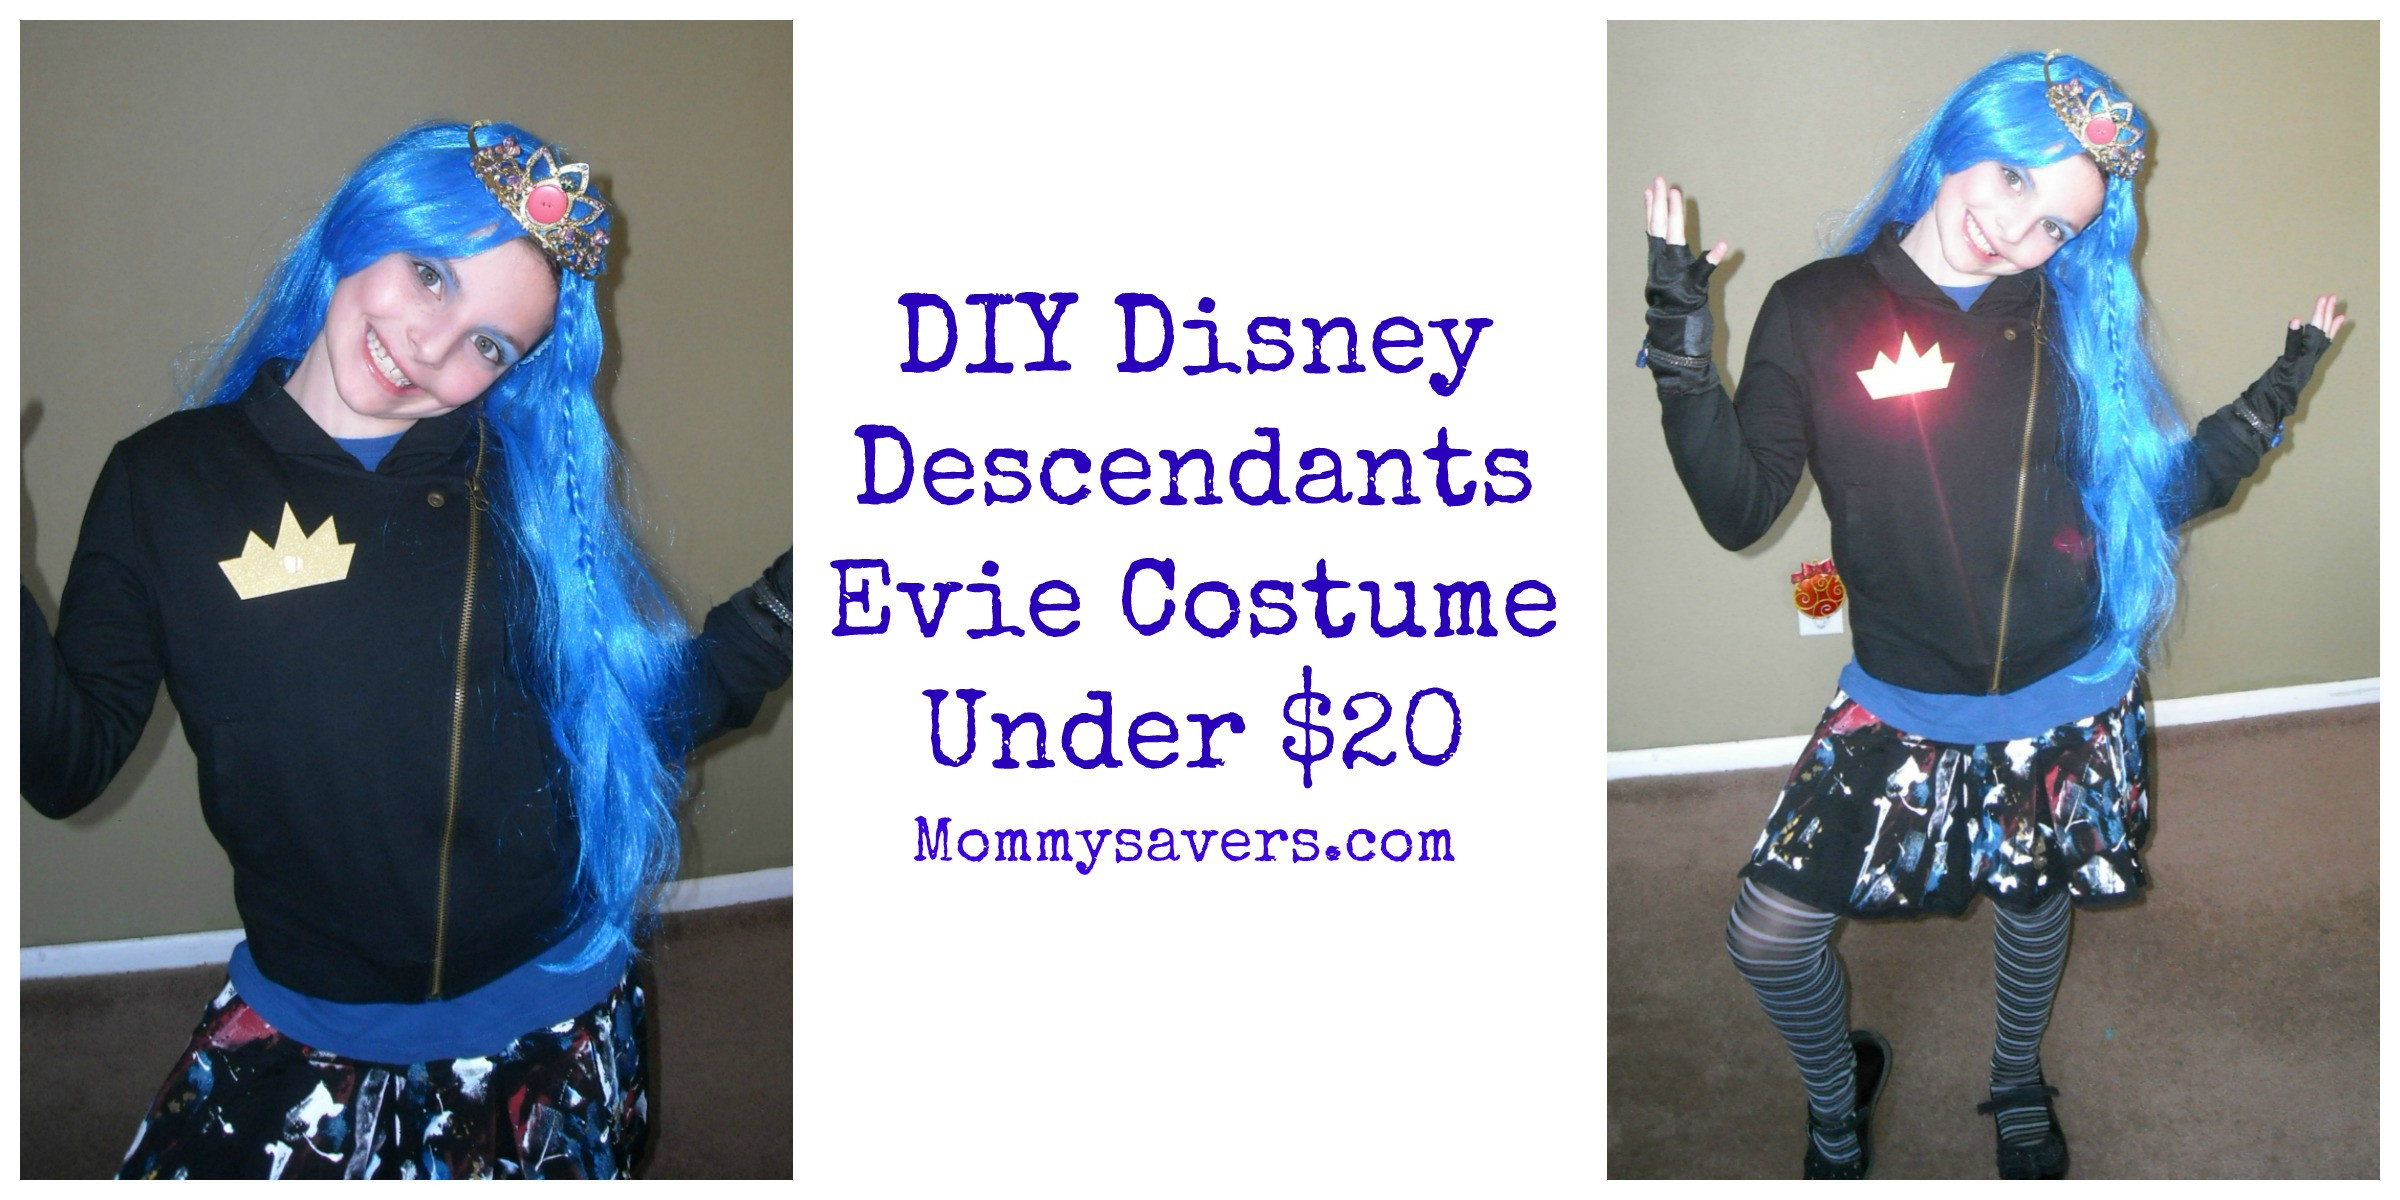 Evie Costume DIY
 DIY Disney Descendants Evie Costume Under $20